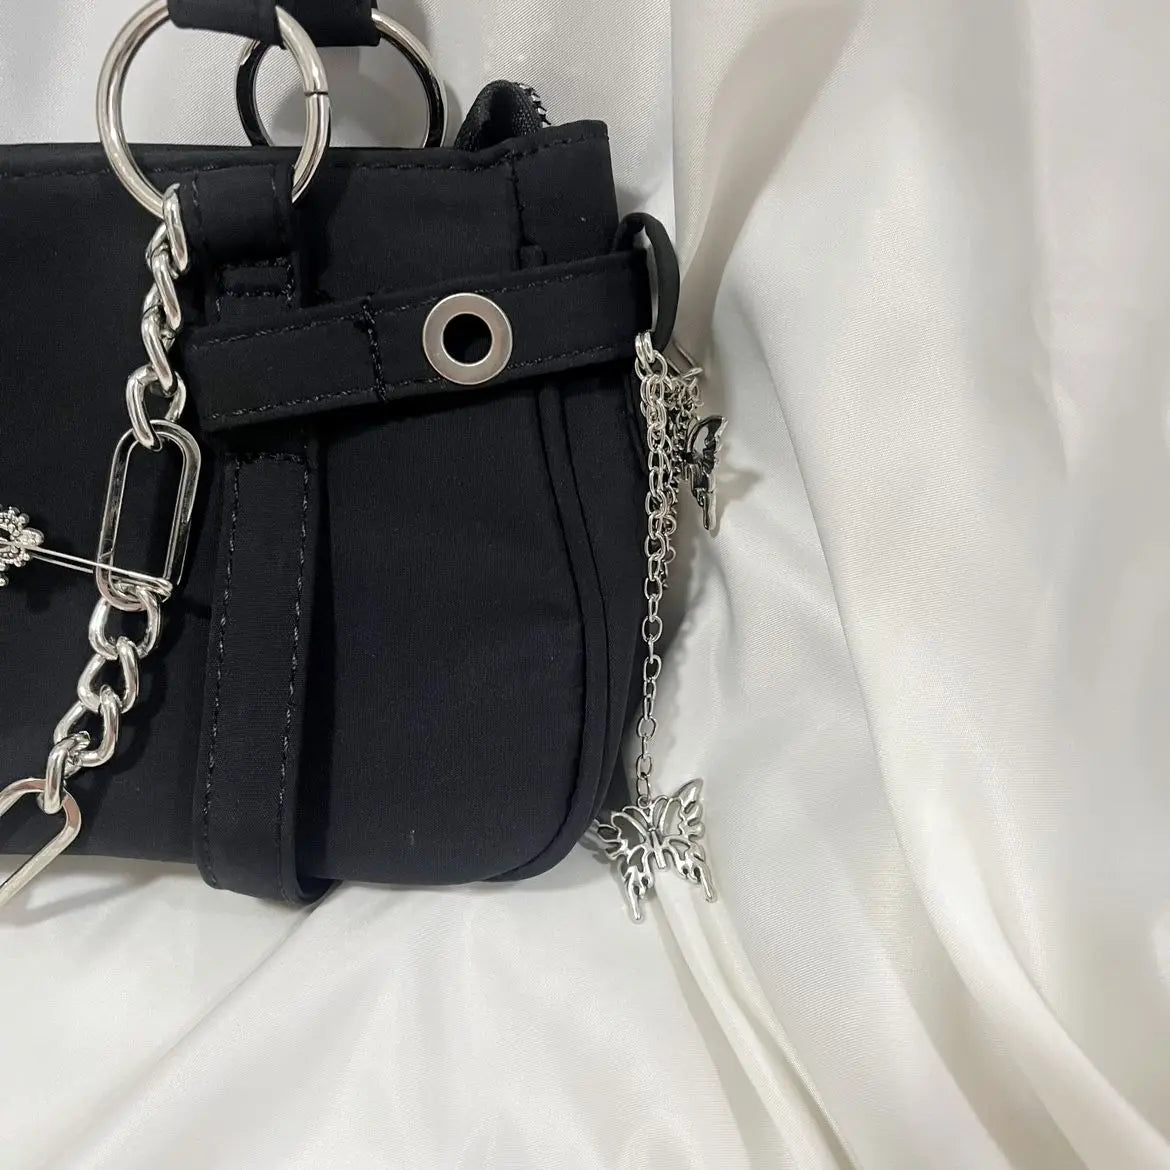 Gothic Cross Chain Shoulder Bag